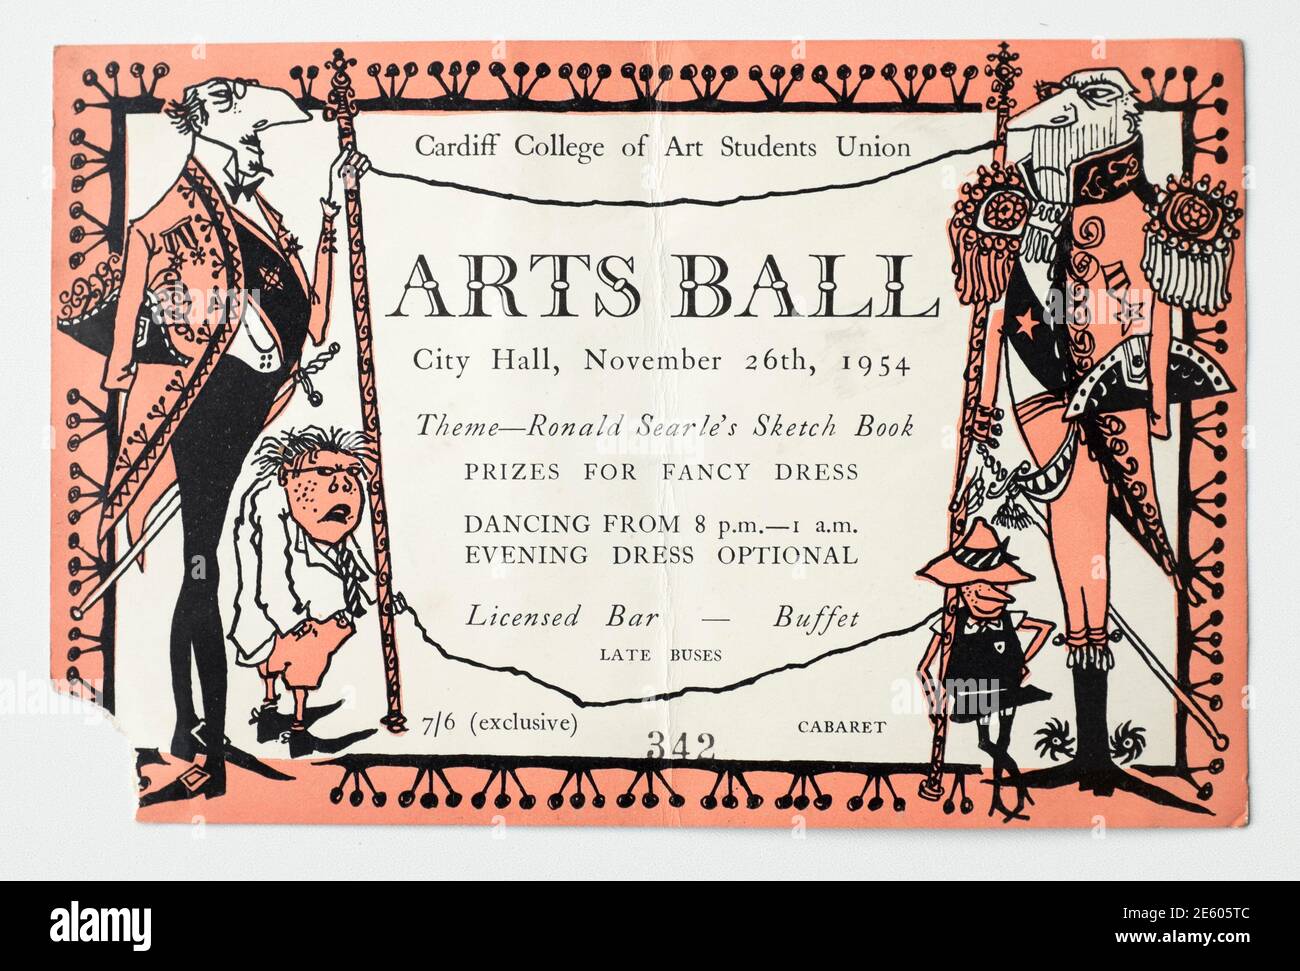 Vintage 1950s Cardiff Art College Students Union Arts Ball Ticket Stock Photo